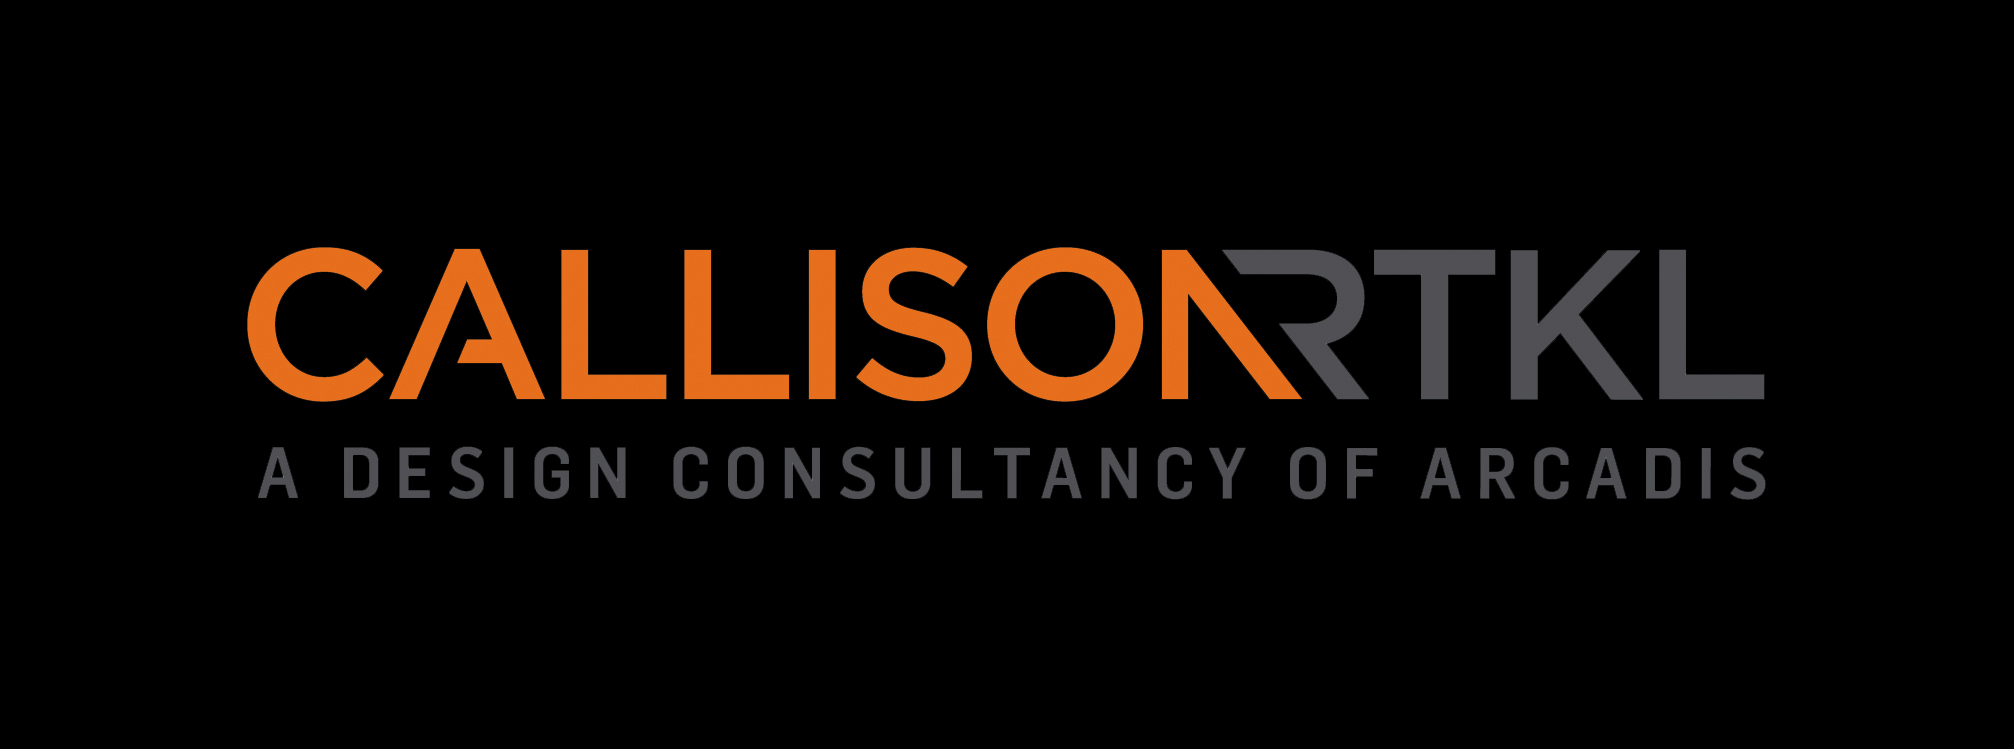 CallisonRTKL-Logo.jpg